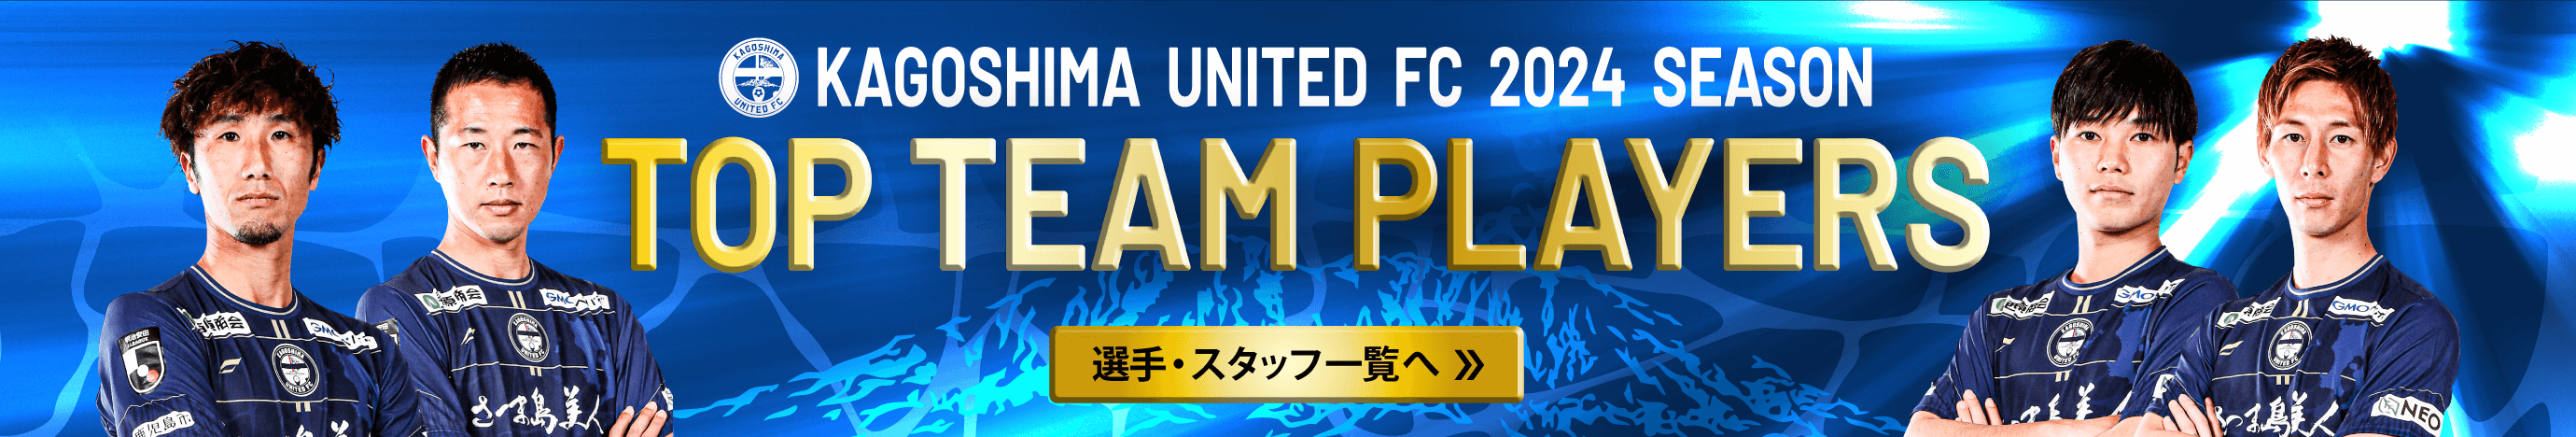 KAGOSHIMA UNITED FC 2024 SEASON TOP TEAM PLAYERS